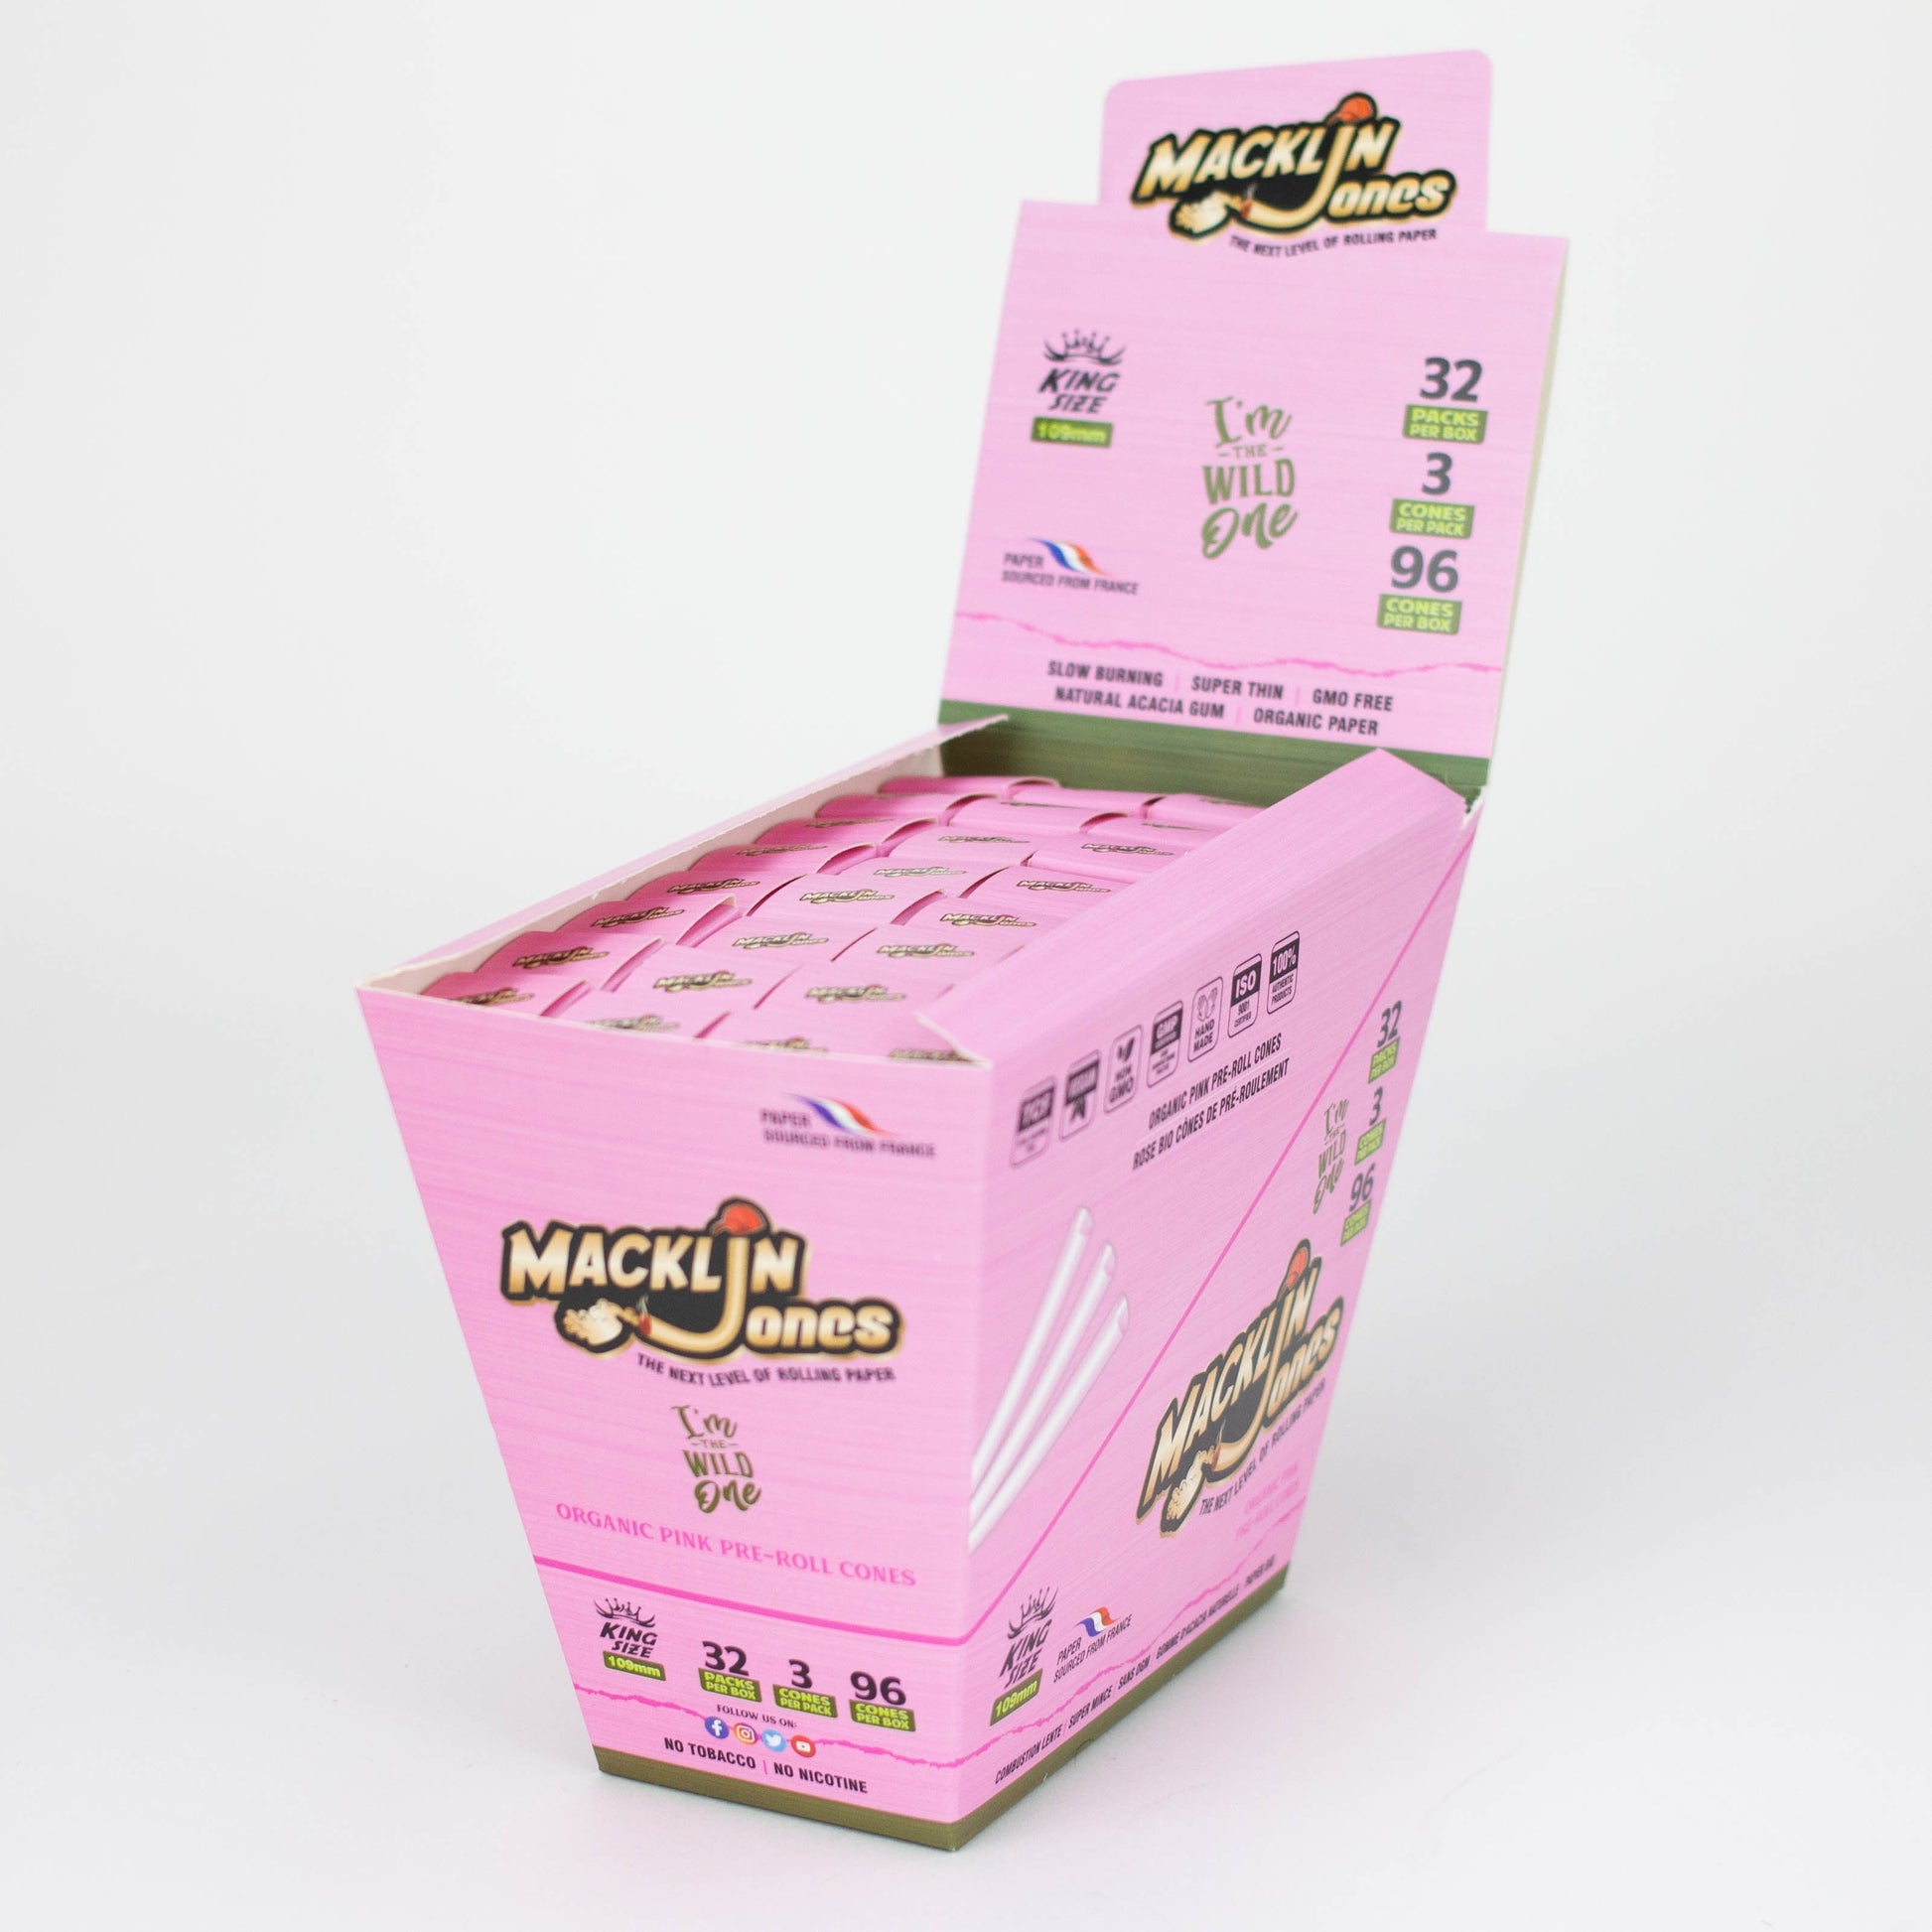 Macklin Jones - Rose Pink Pre-Rolled cone Box_1